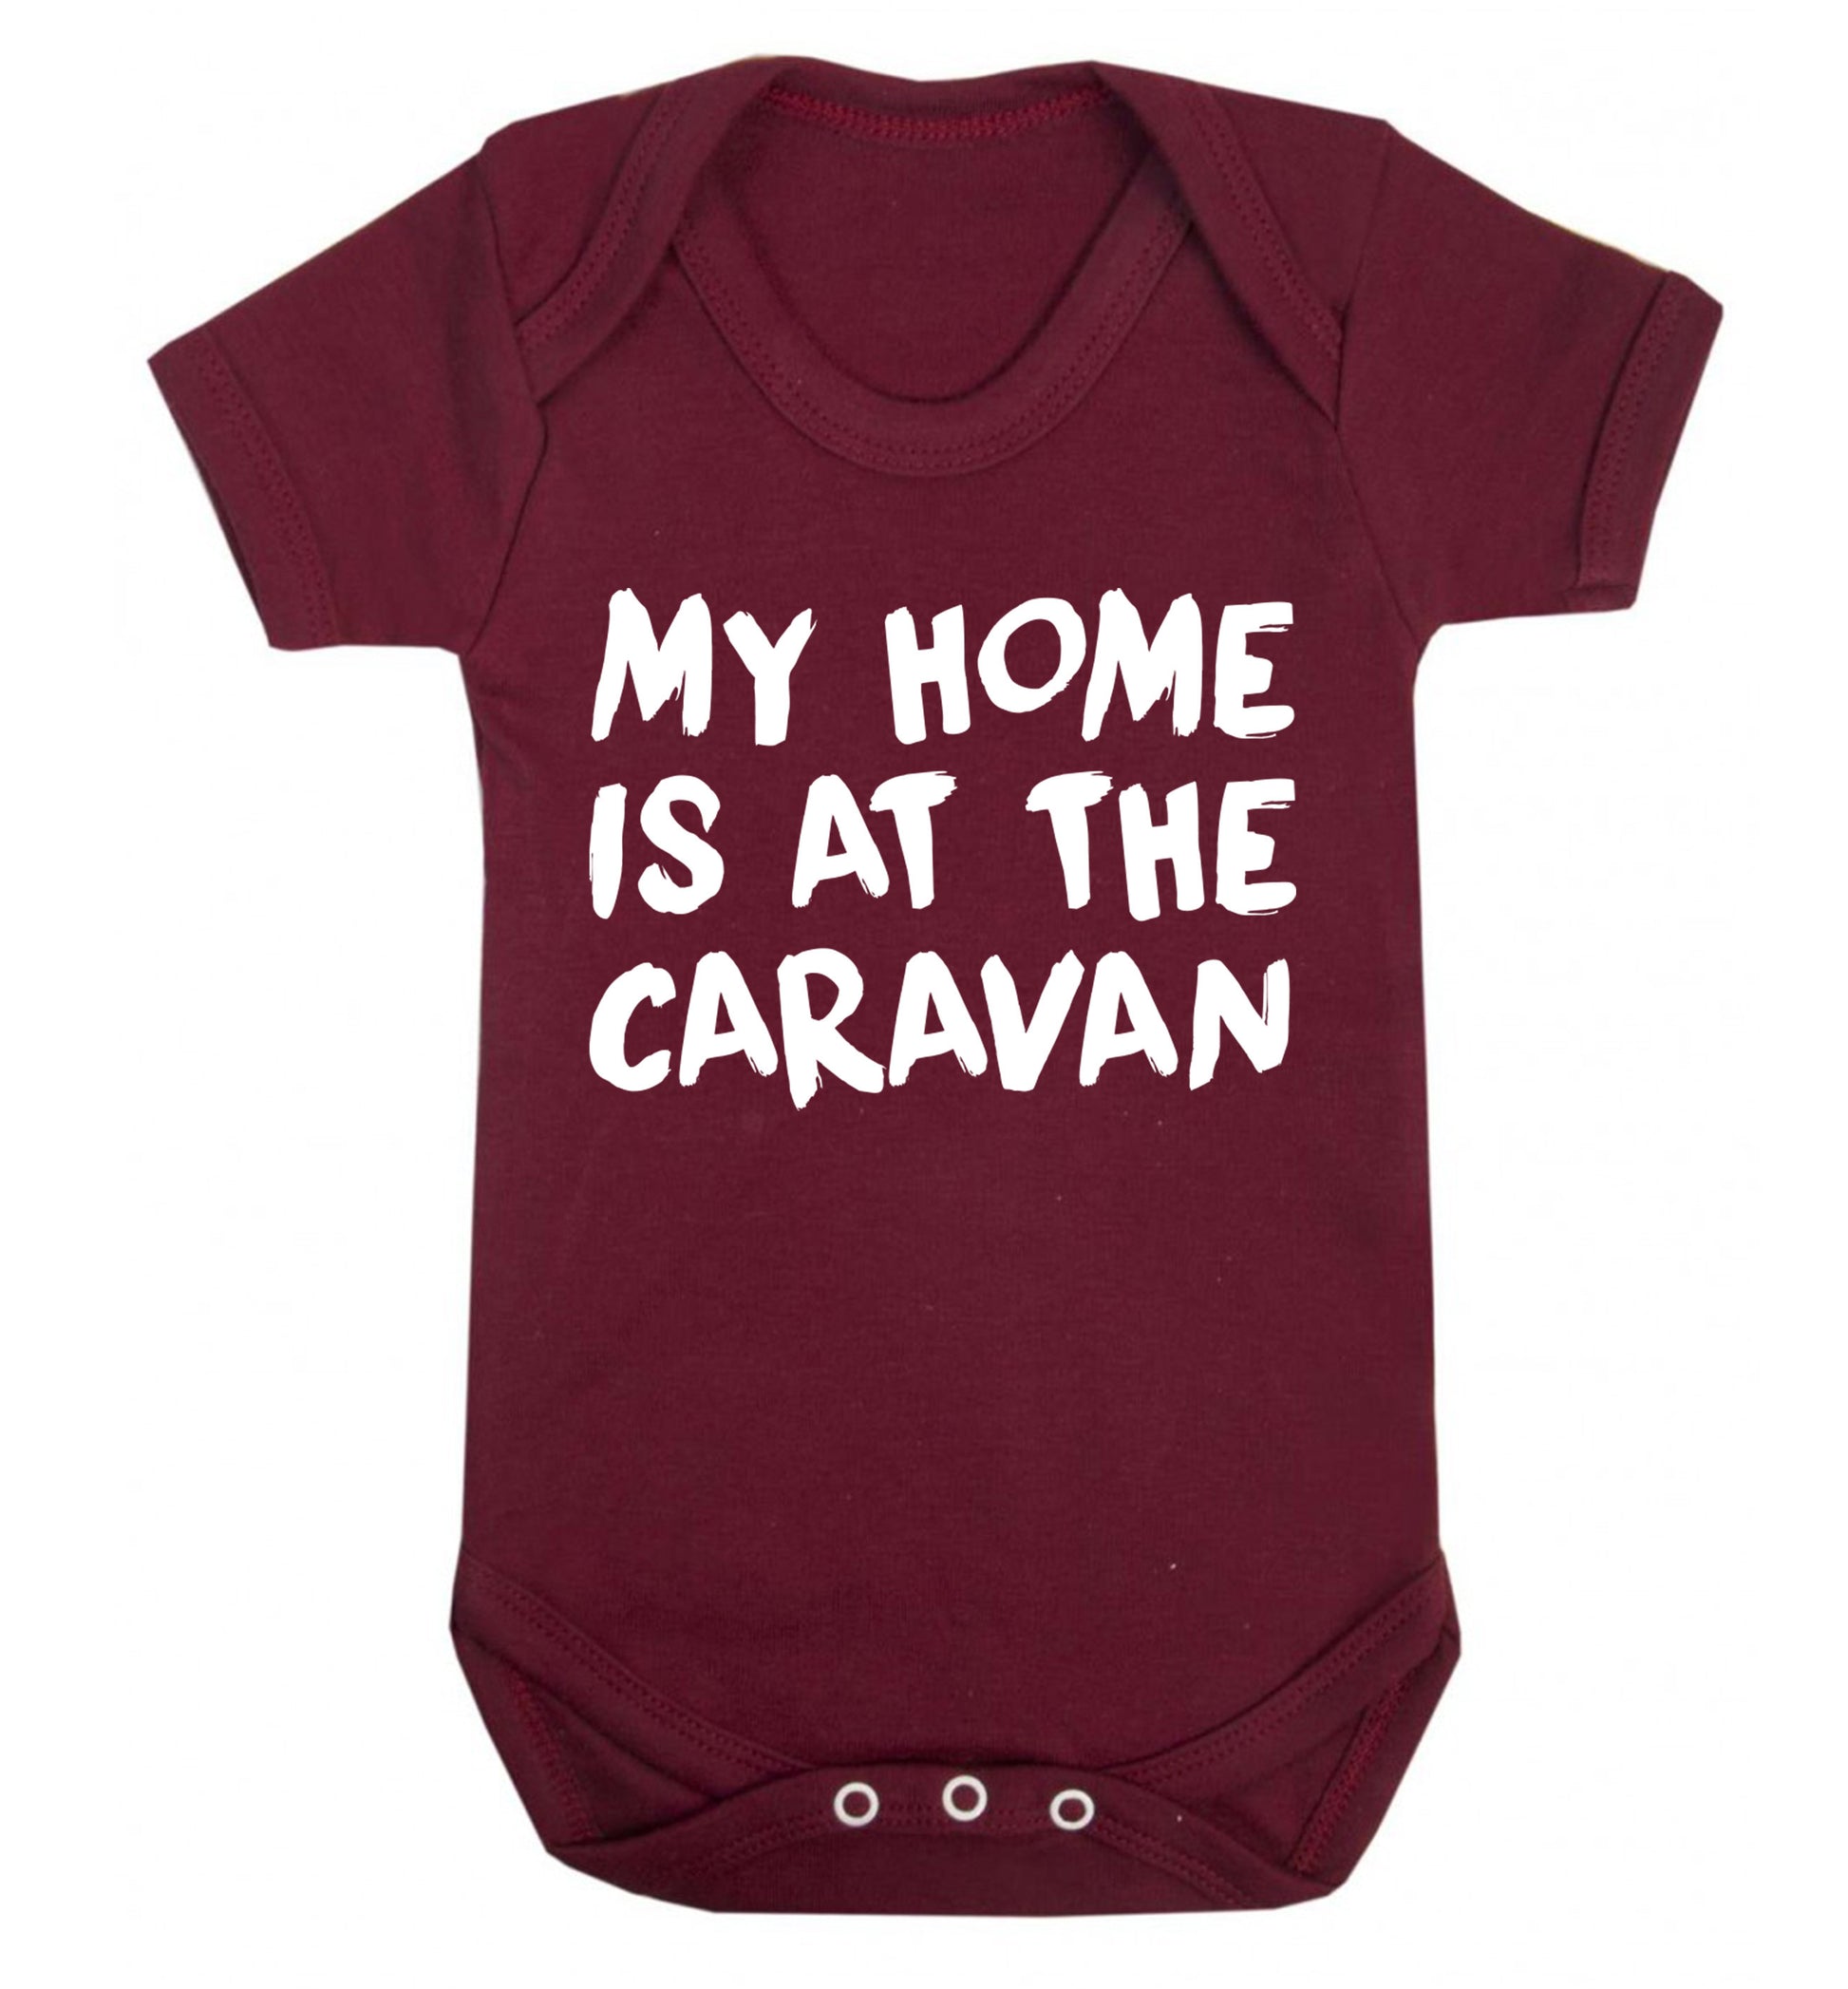 My home is at the caravan Baby Vest maroon 18-24 months